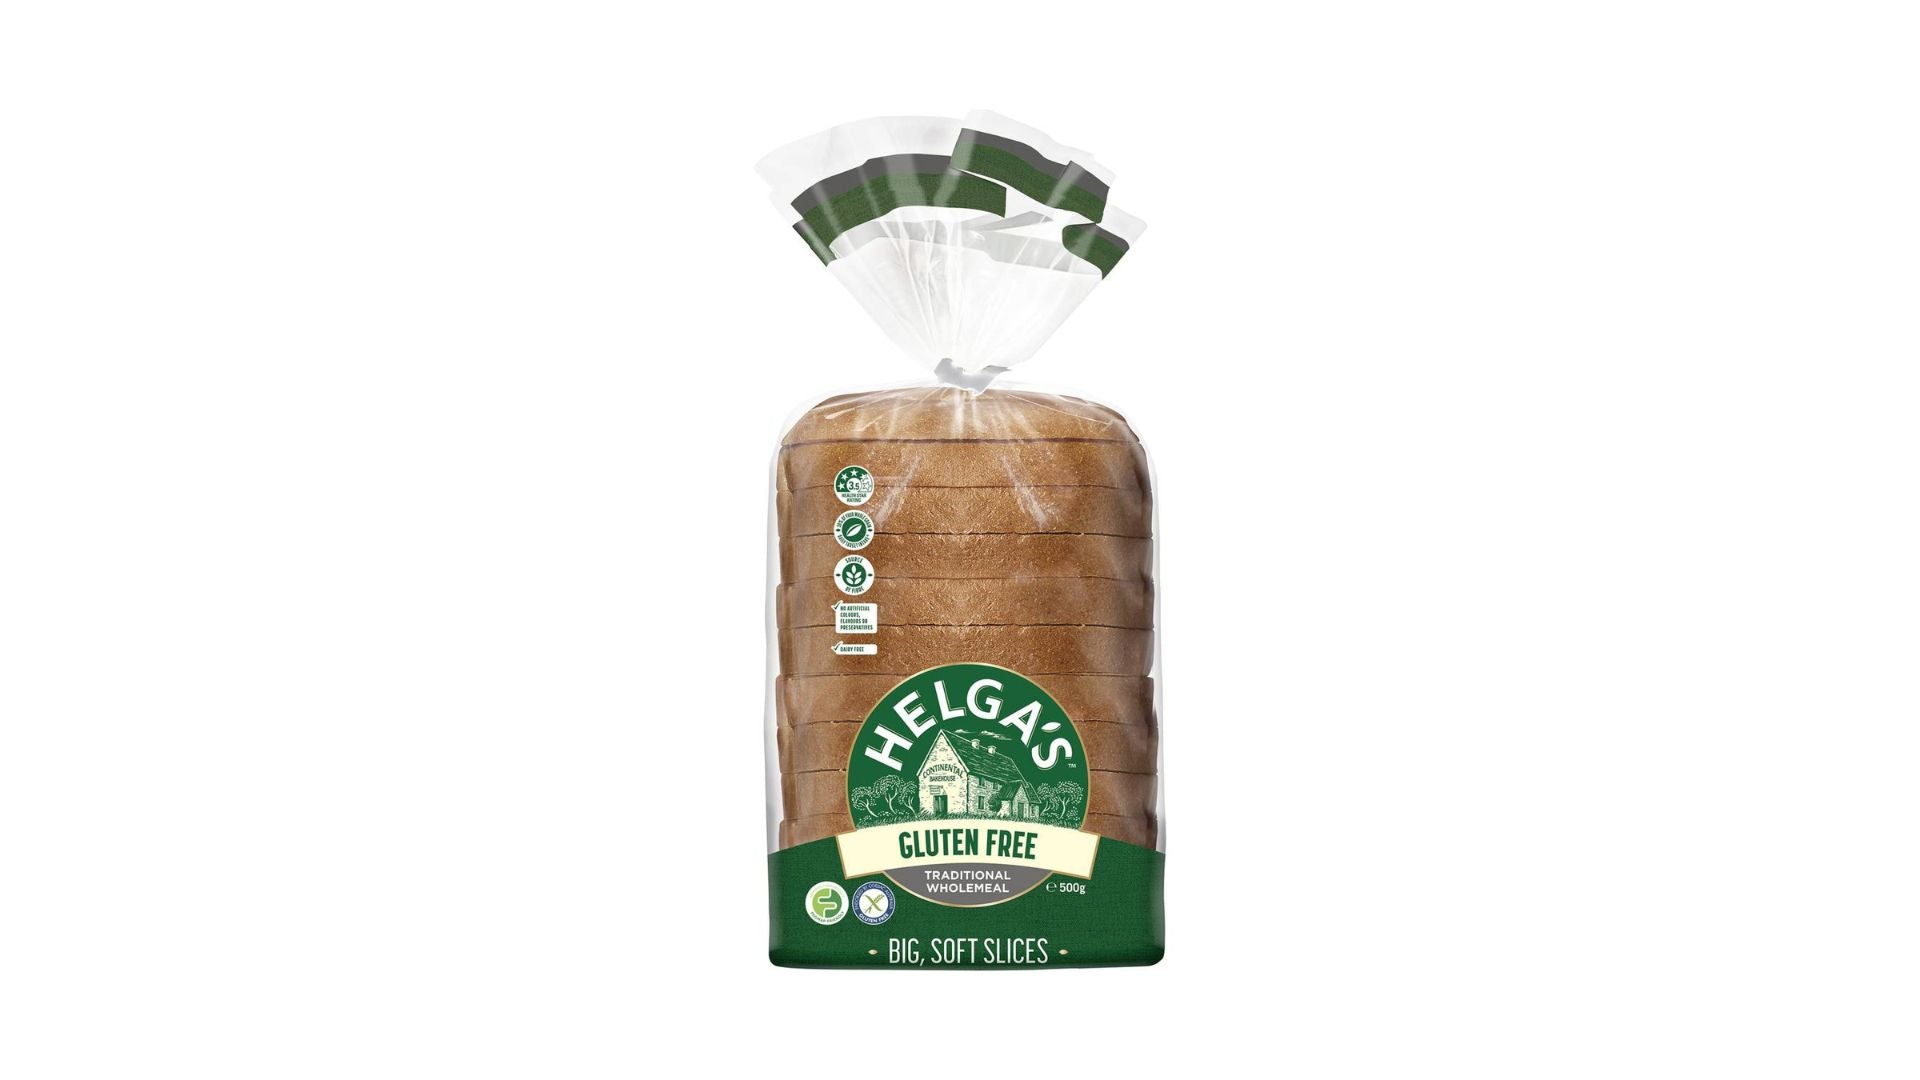 Helga's Gluten Free Wholemeal Bread 500g